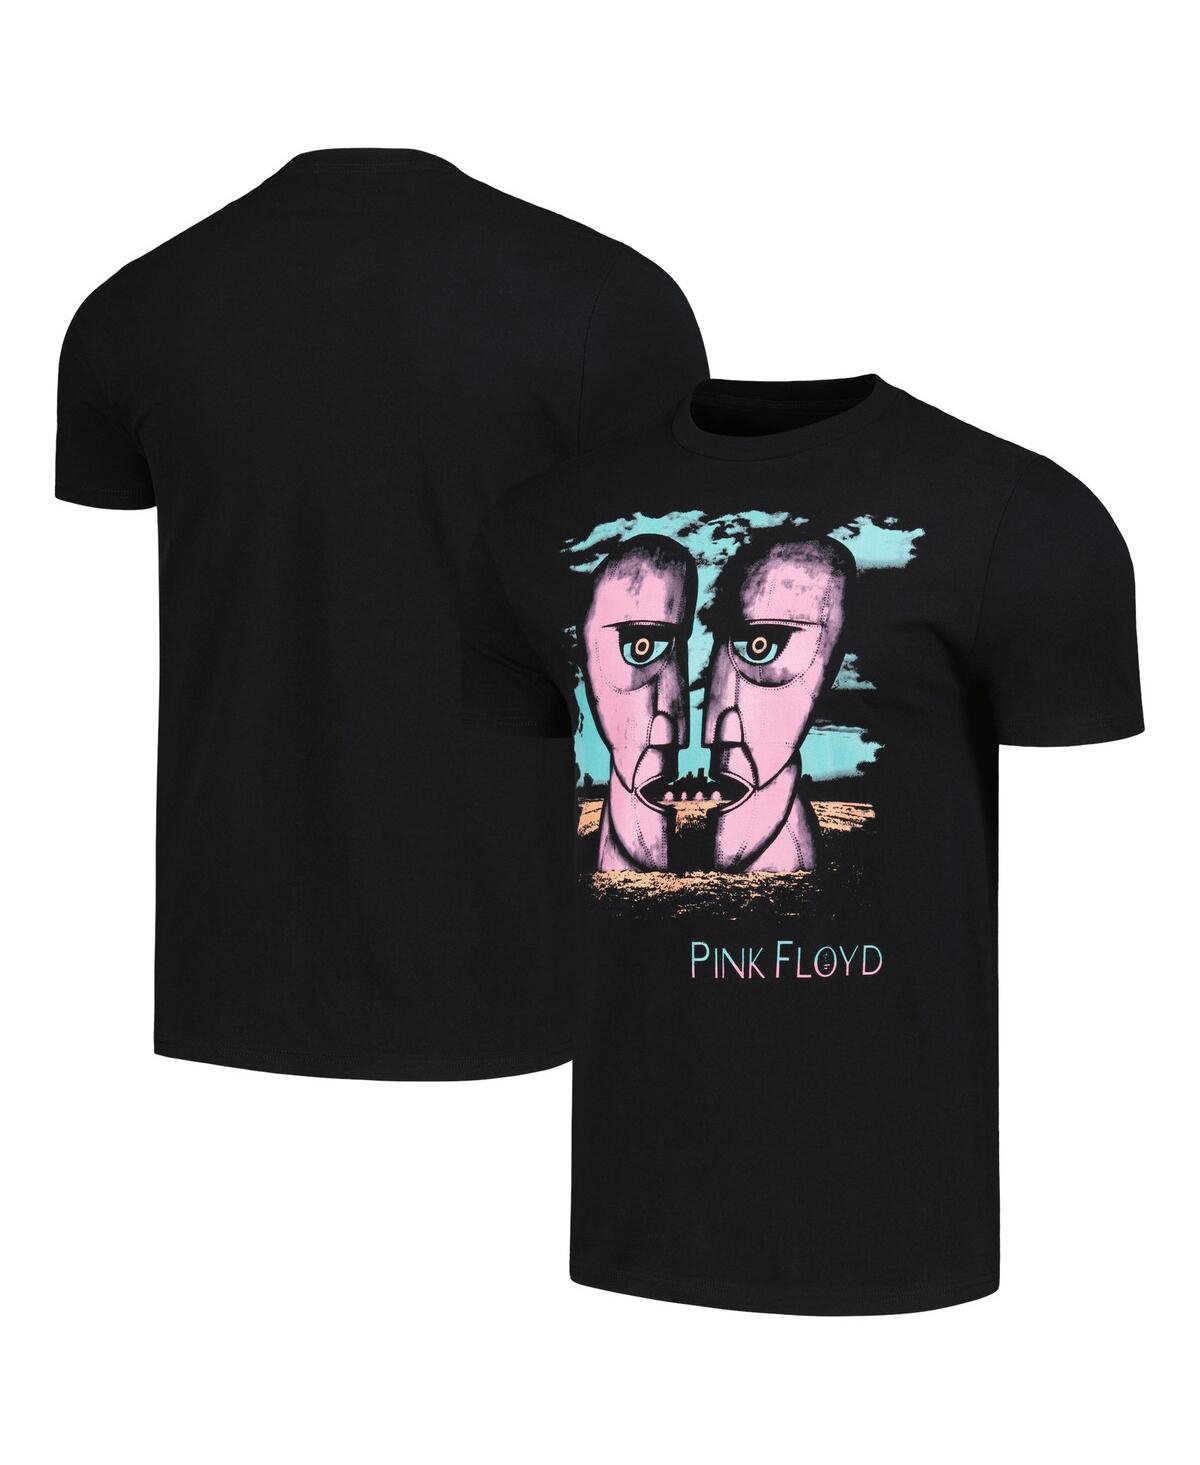 Men's Black Pink Floyd Graphic T-shirt - Black